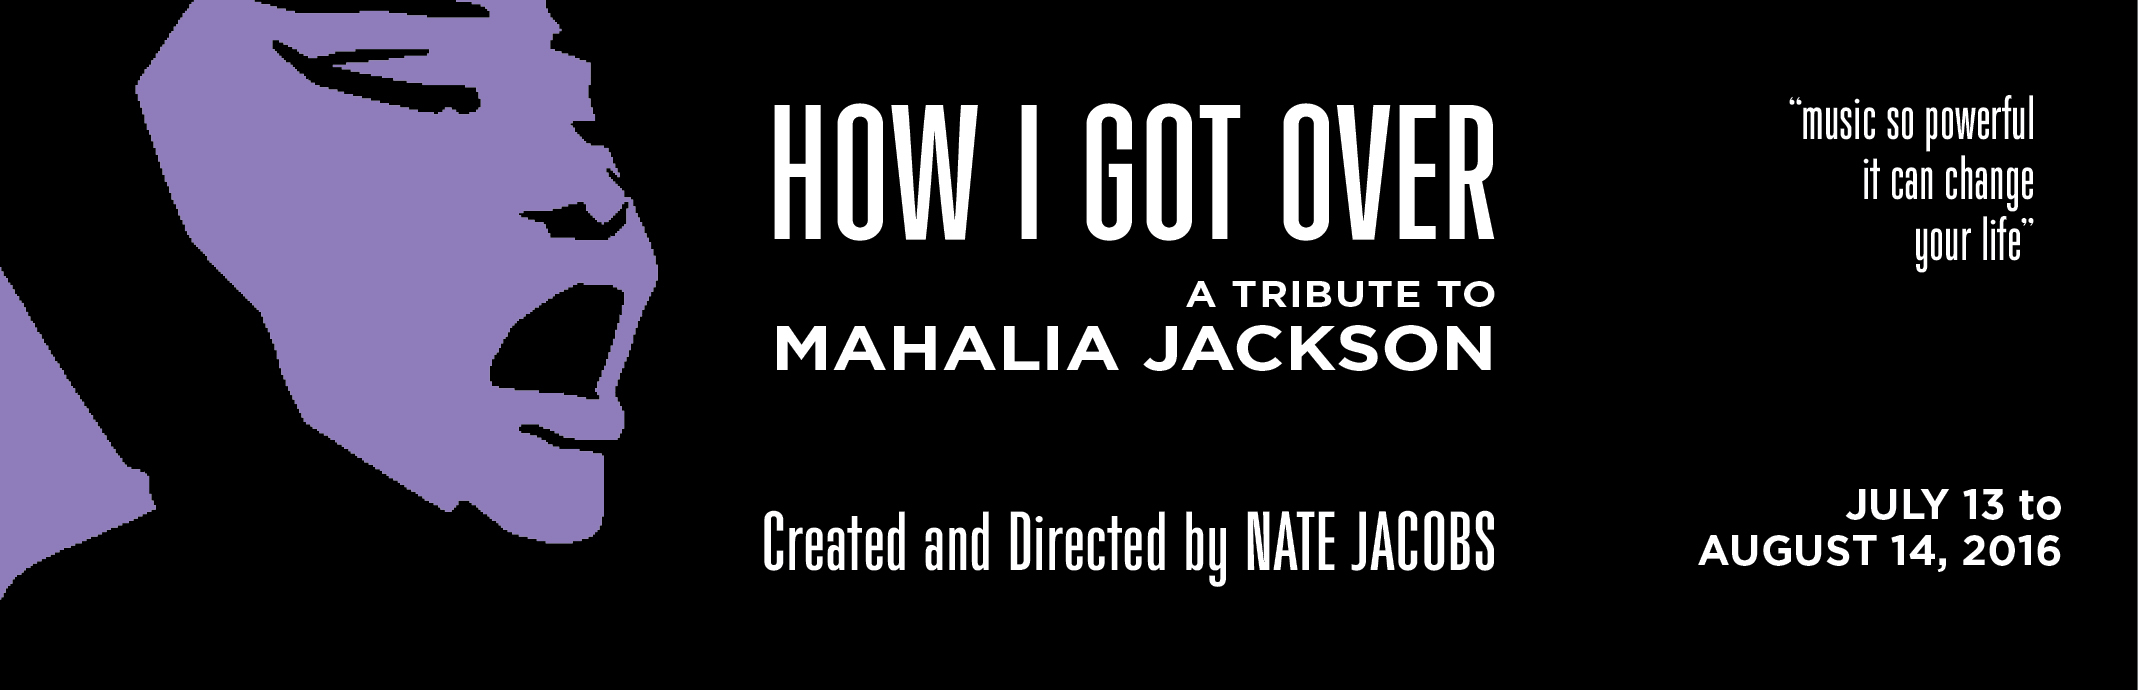 How I Got Over: A Tribute to Mahalia Jackson